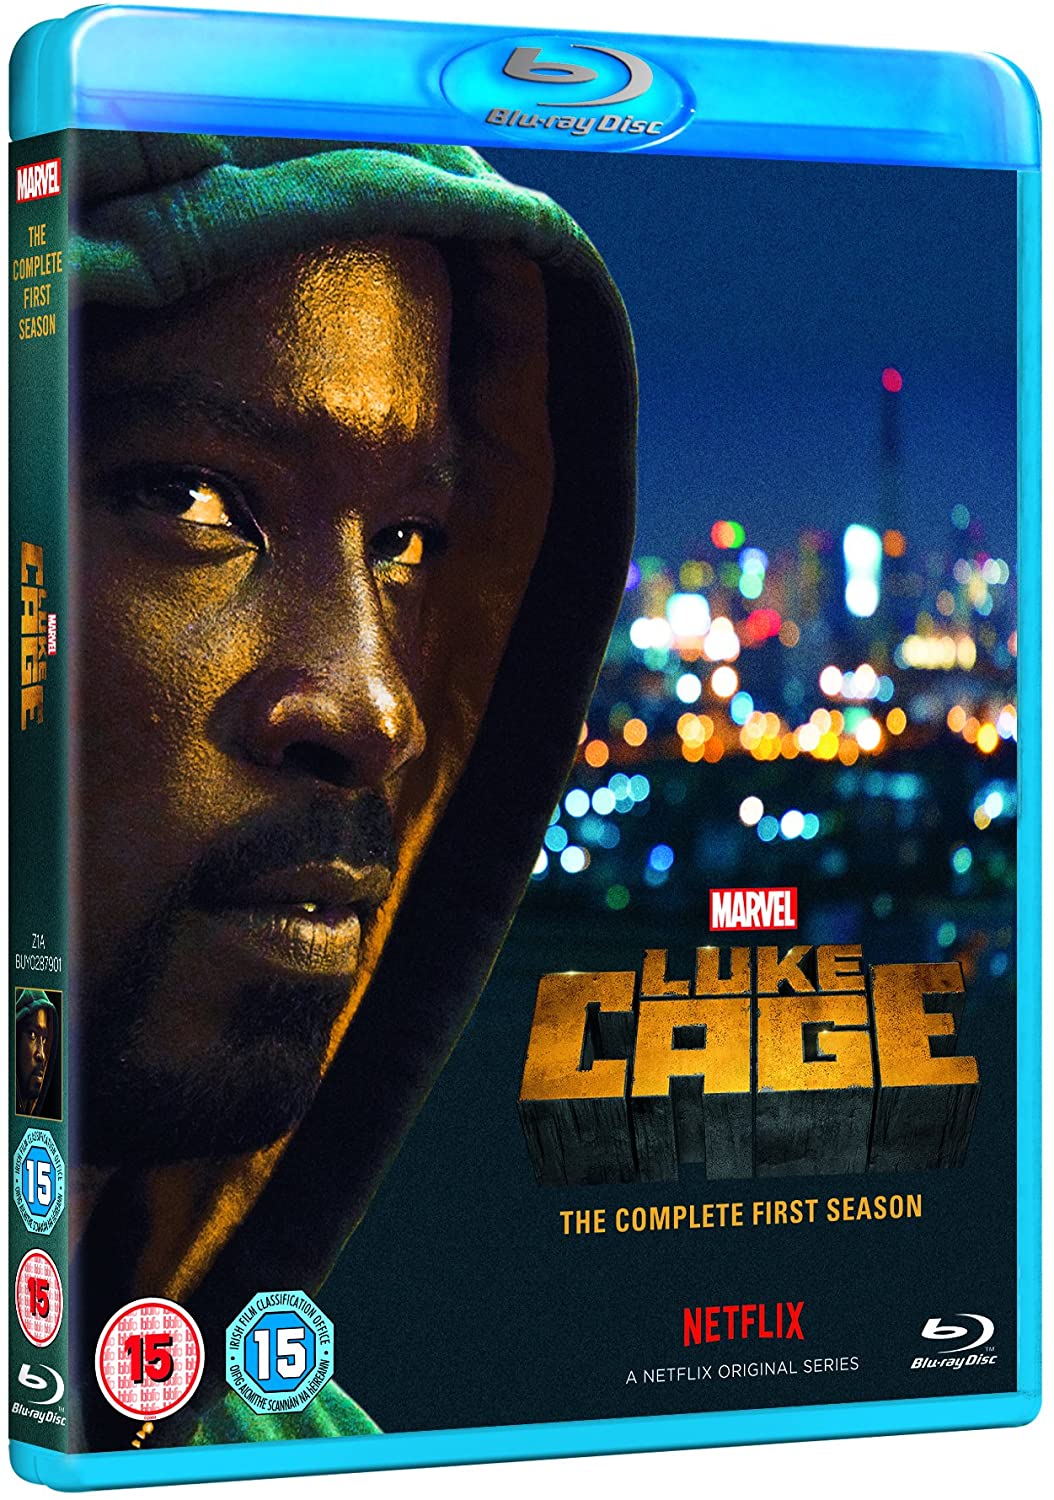 Marvel's Luke Cage S1 [Blu-ray]